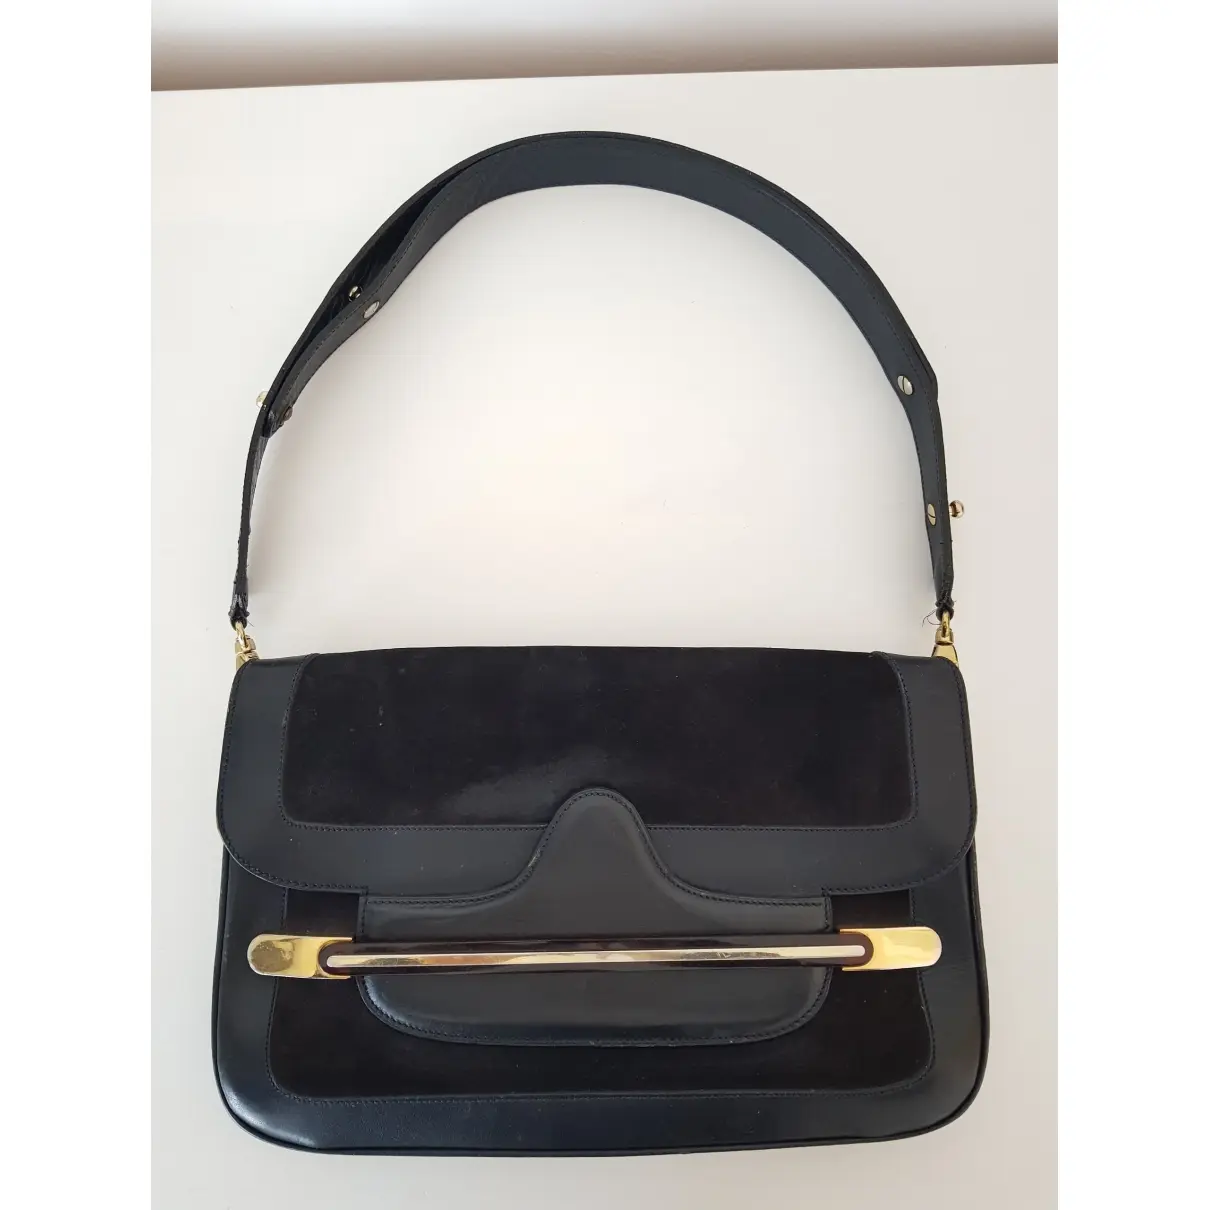 Buy Fontana Milano 1915 Leather handbag online - Vintage